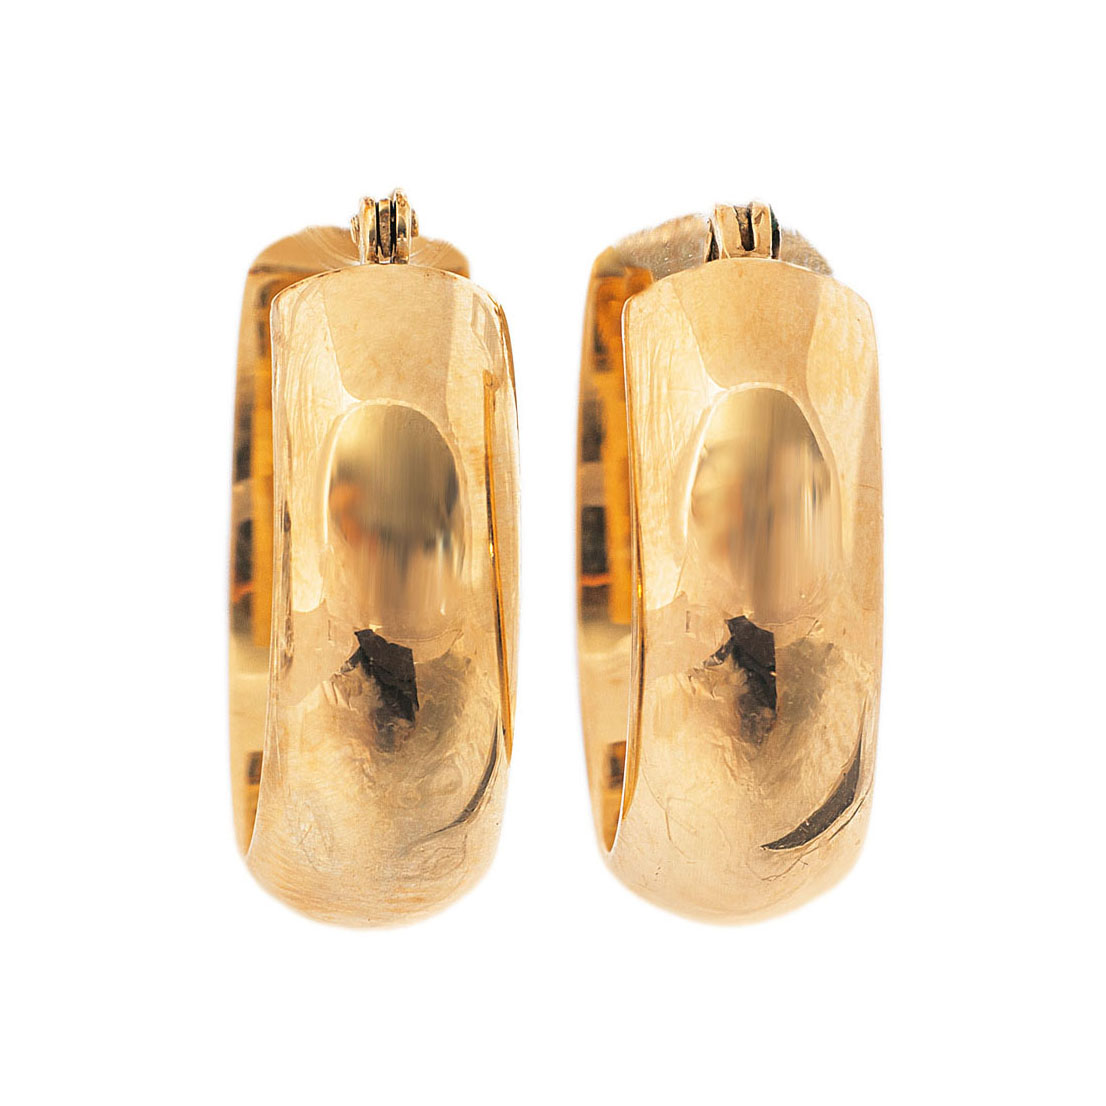 A pair of golden earrings